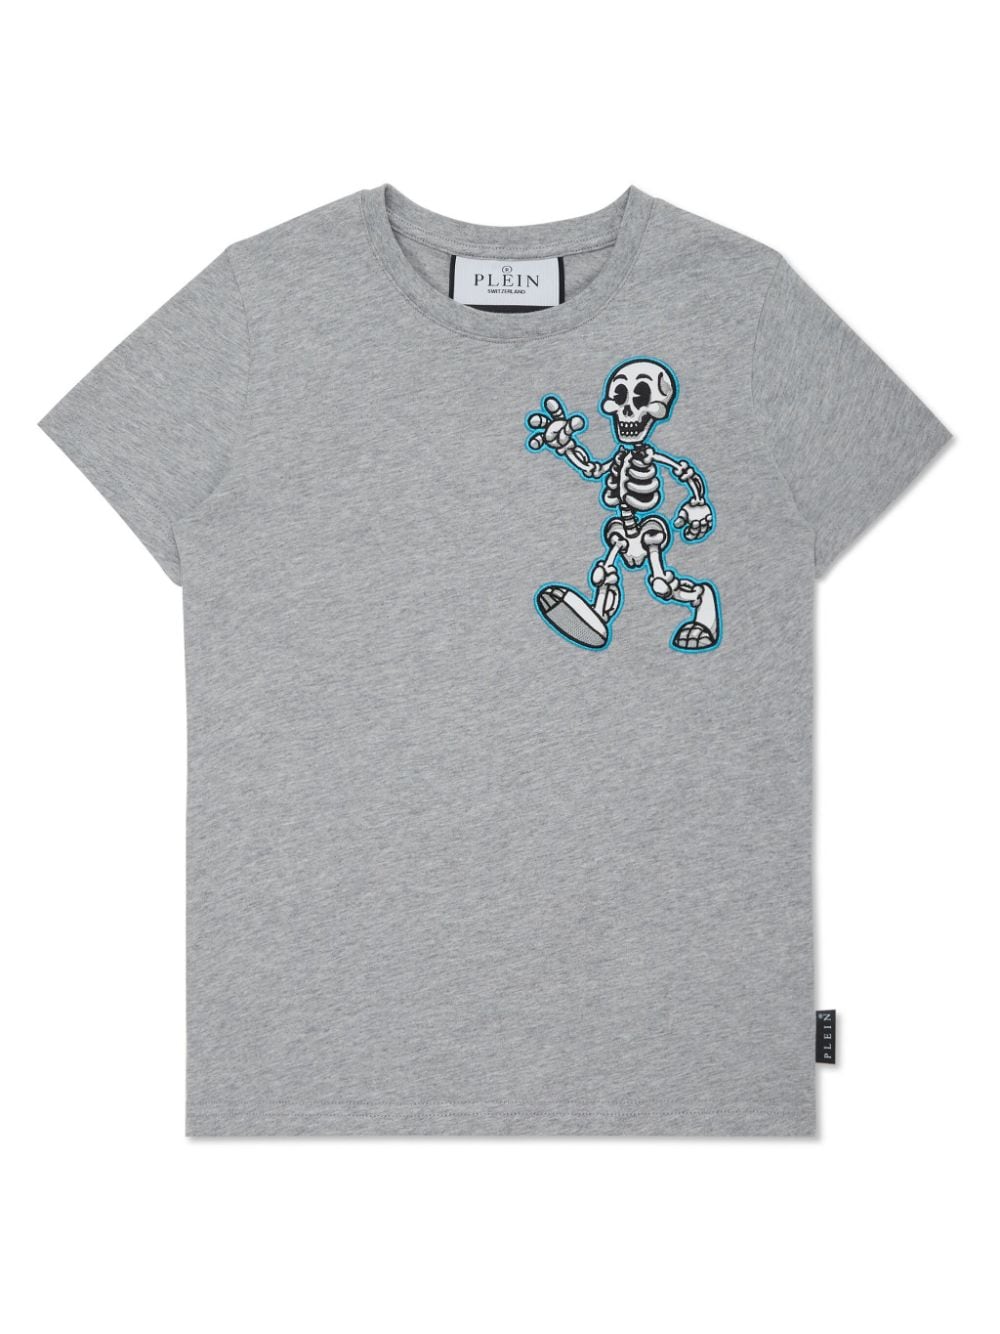 Philipp Plein Skully Gang T-Shirt - Grau von Philipp Plein